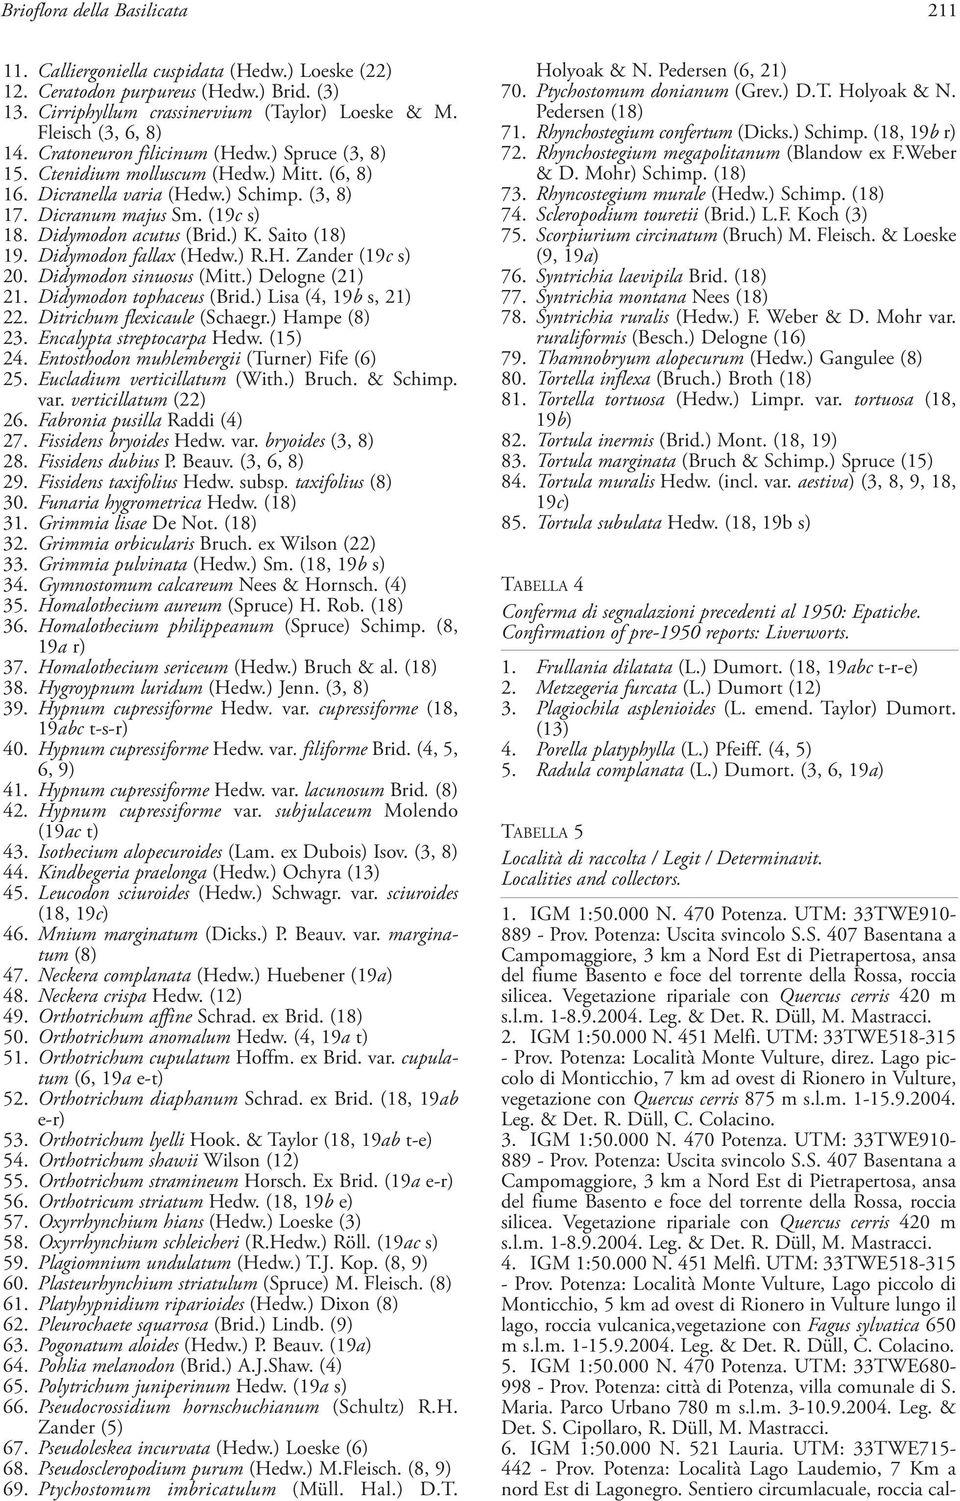 Saito (18) 19. Didymodon fallax (Hedw.) R.H. Zander (19c s) 20. Didymodon sinuosus (Mitt.) Delogne (21) 21. Didymodon tophaceus (Brid.) Lisa (4, 19b s, 21) 22. Ditrichum flexicaule (Schaegr.